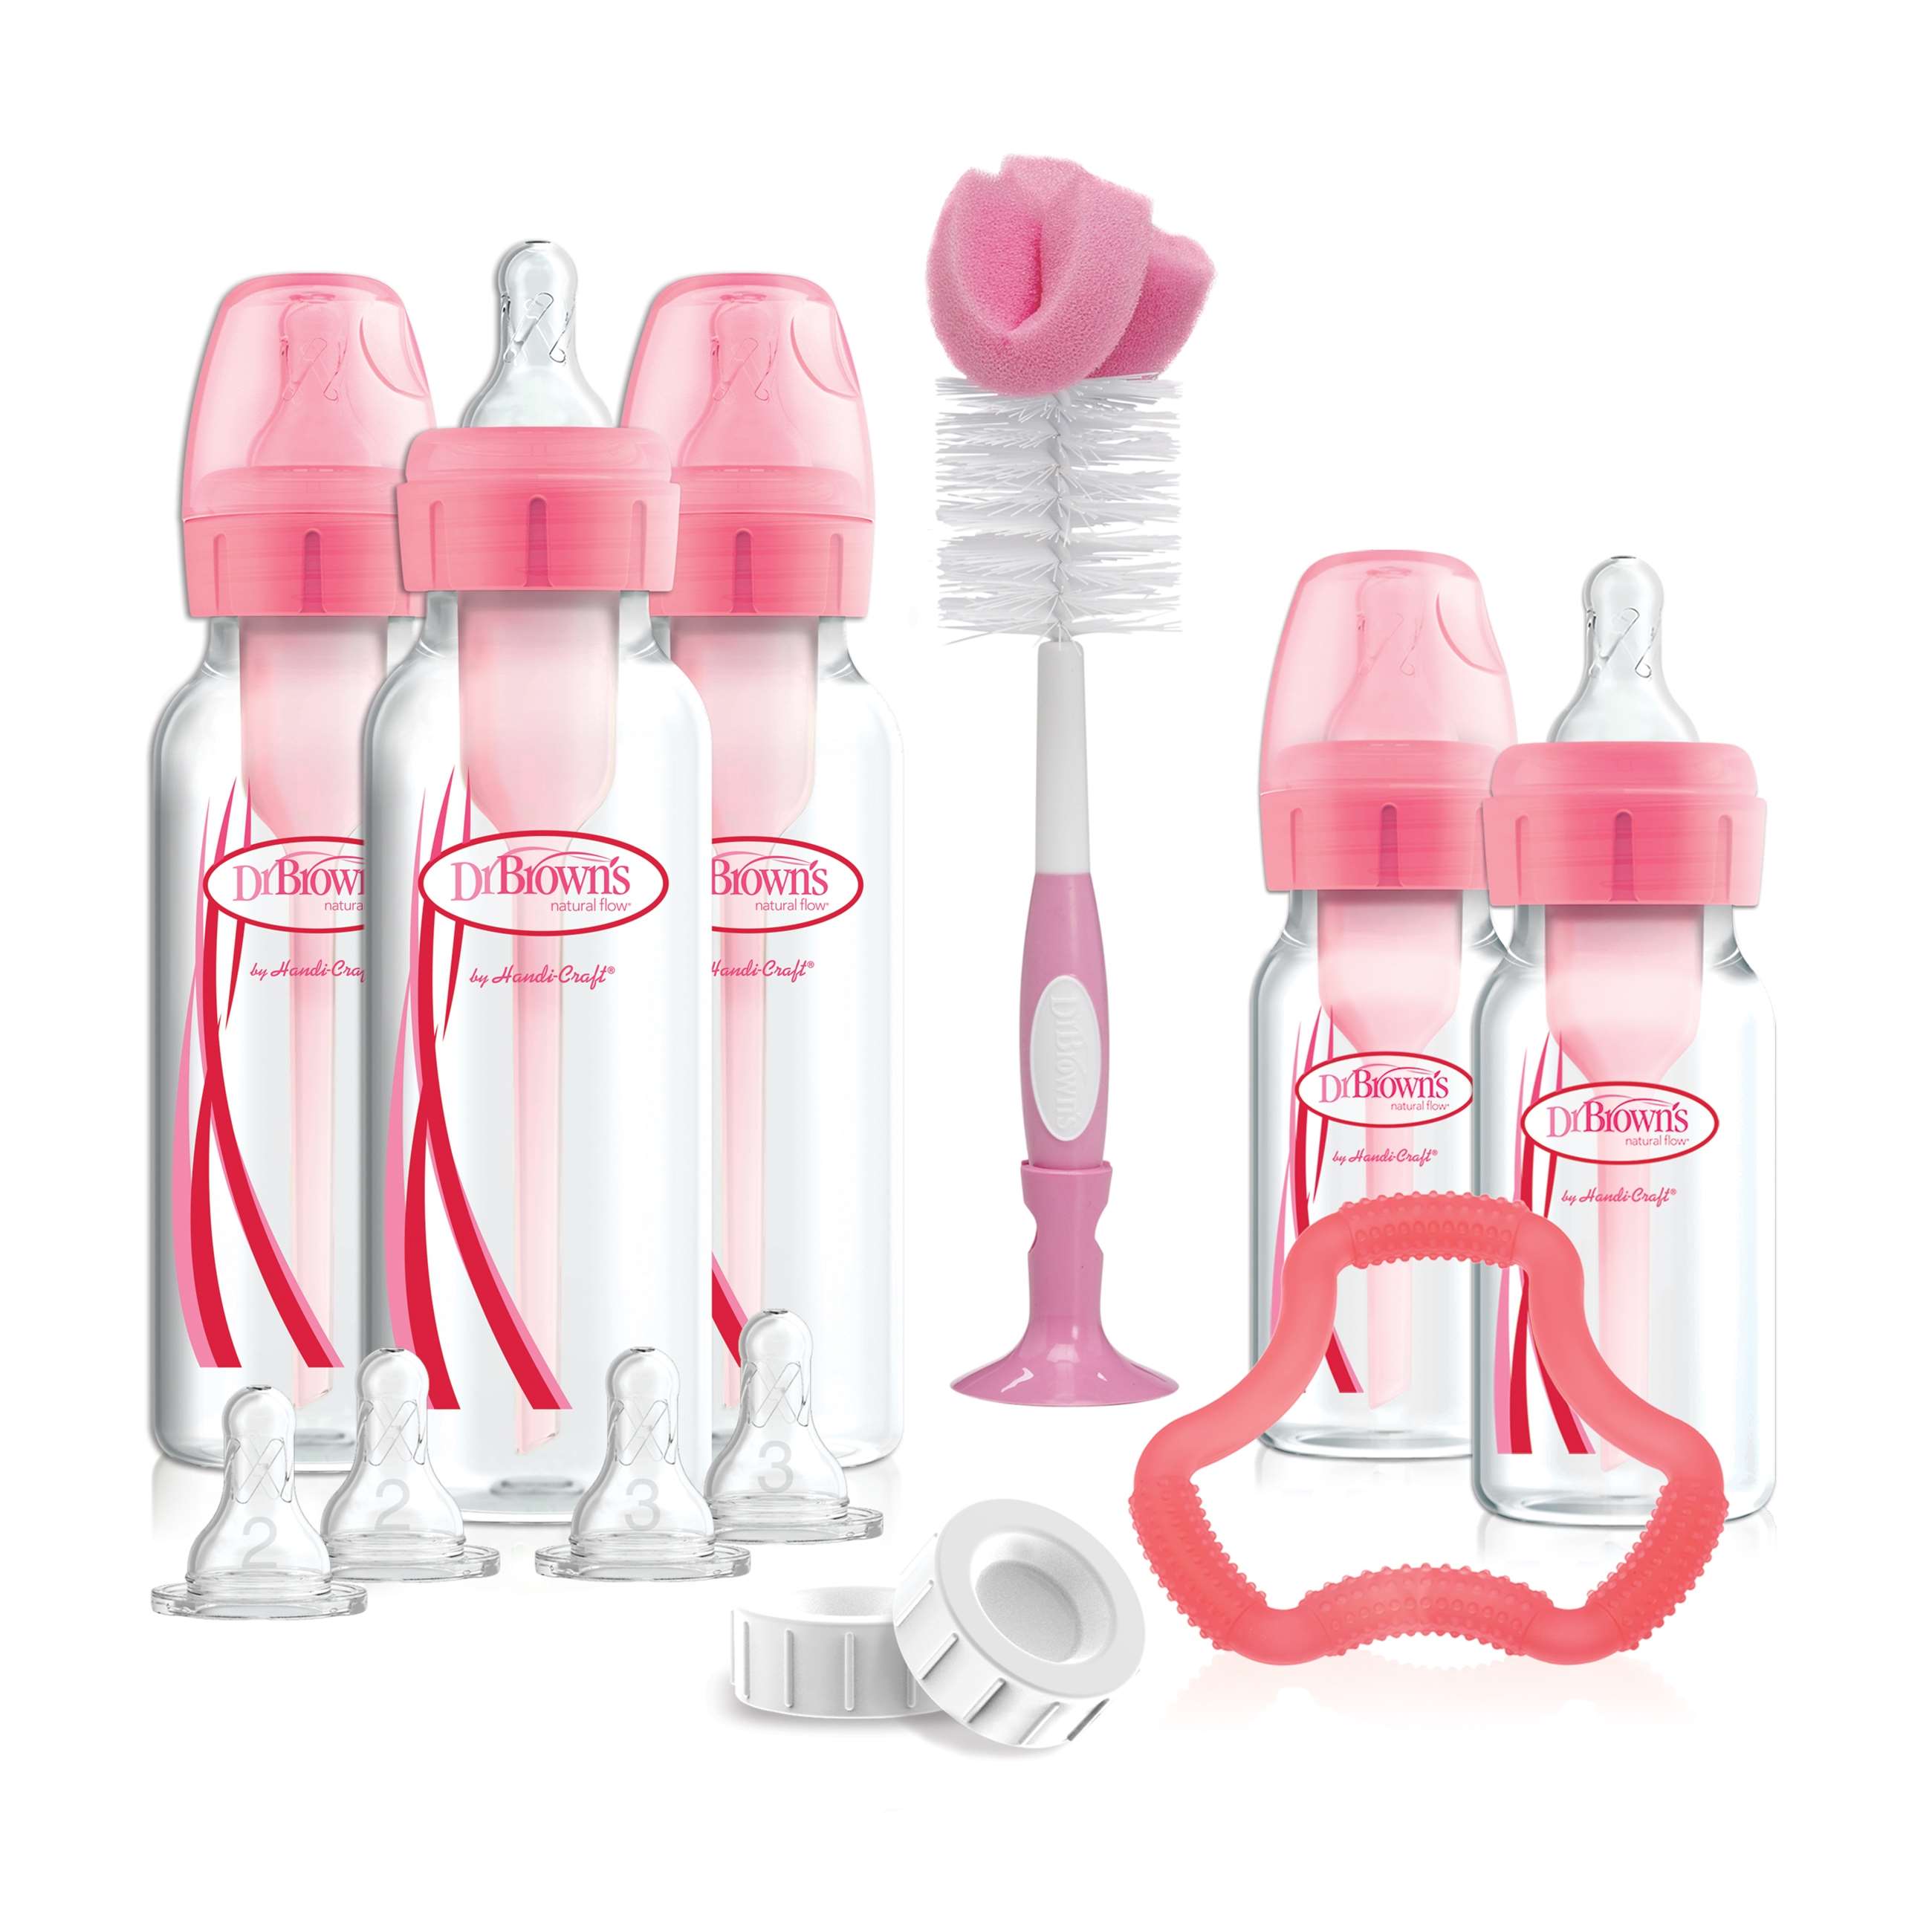 sb05305-esx_product_options+_narrow_bottle_gift_set_pink